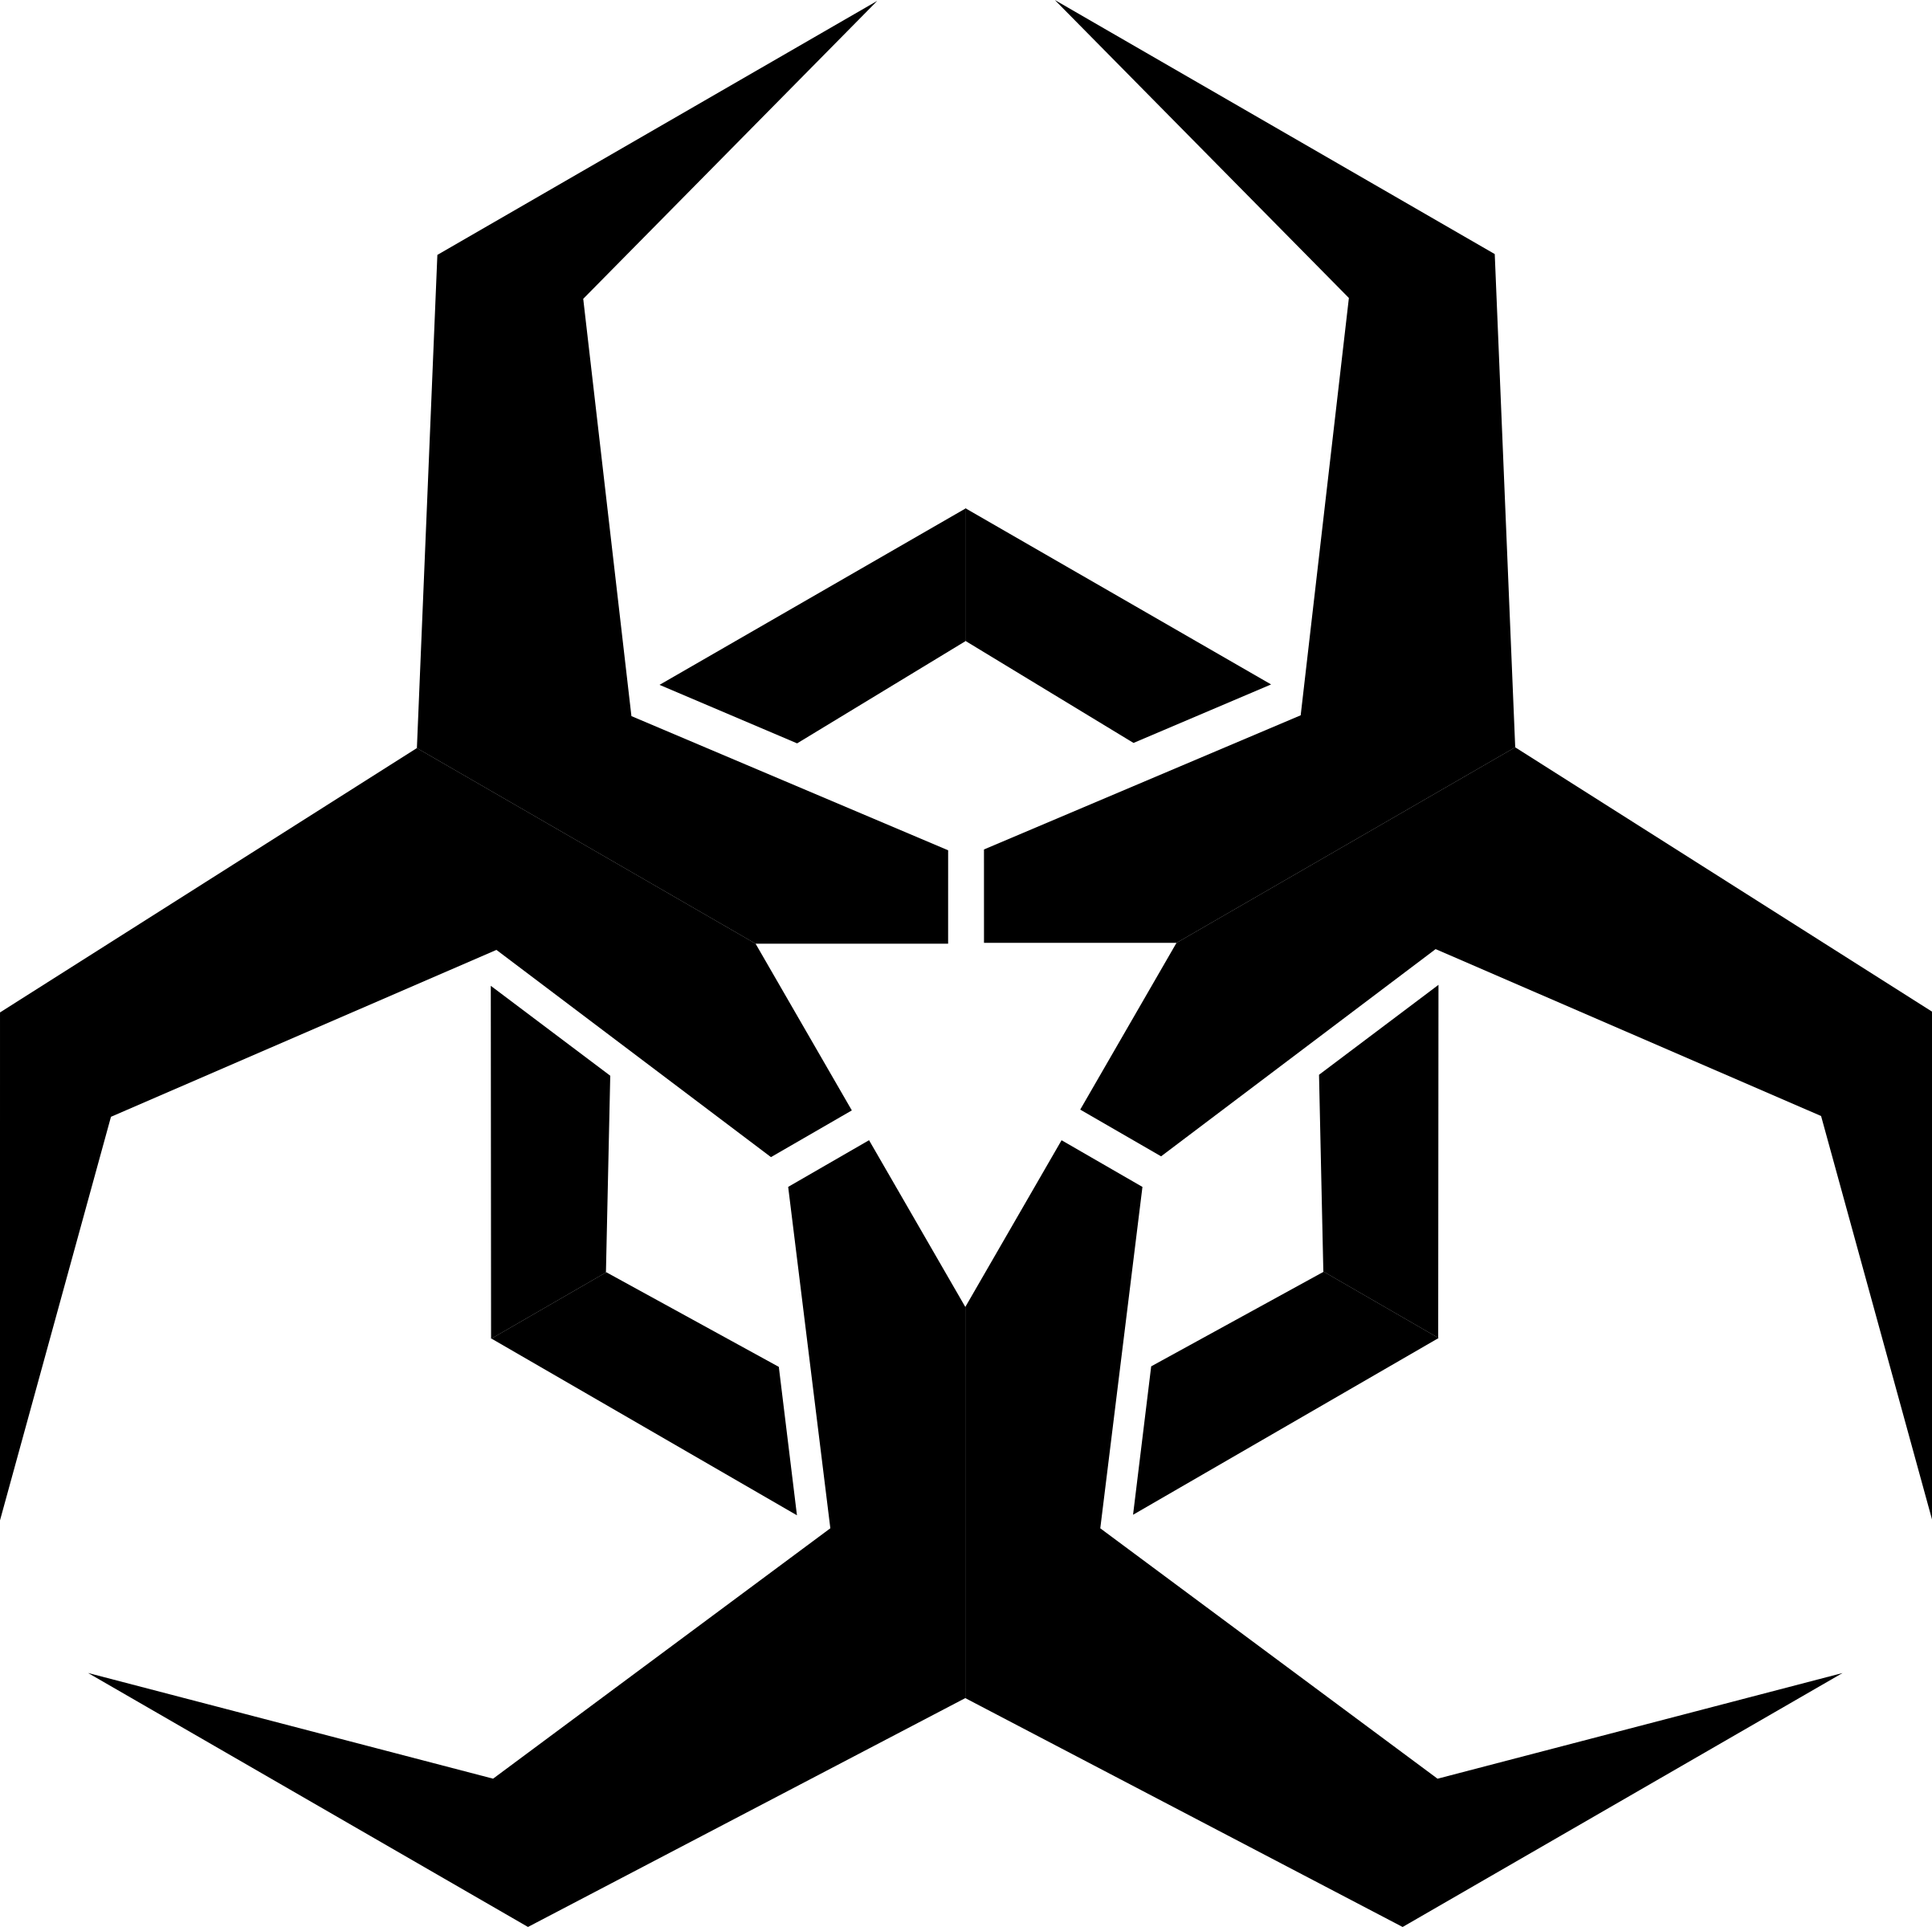 Cool Biohazard Symbole Logo PNG image Transparente